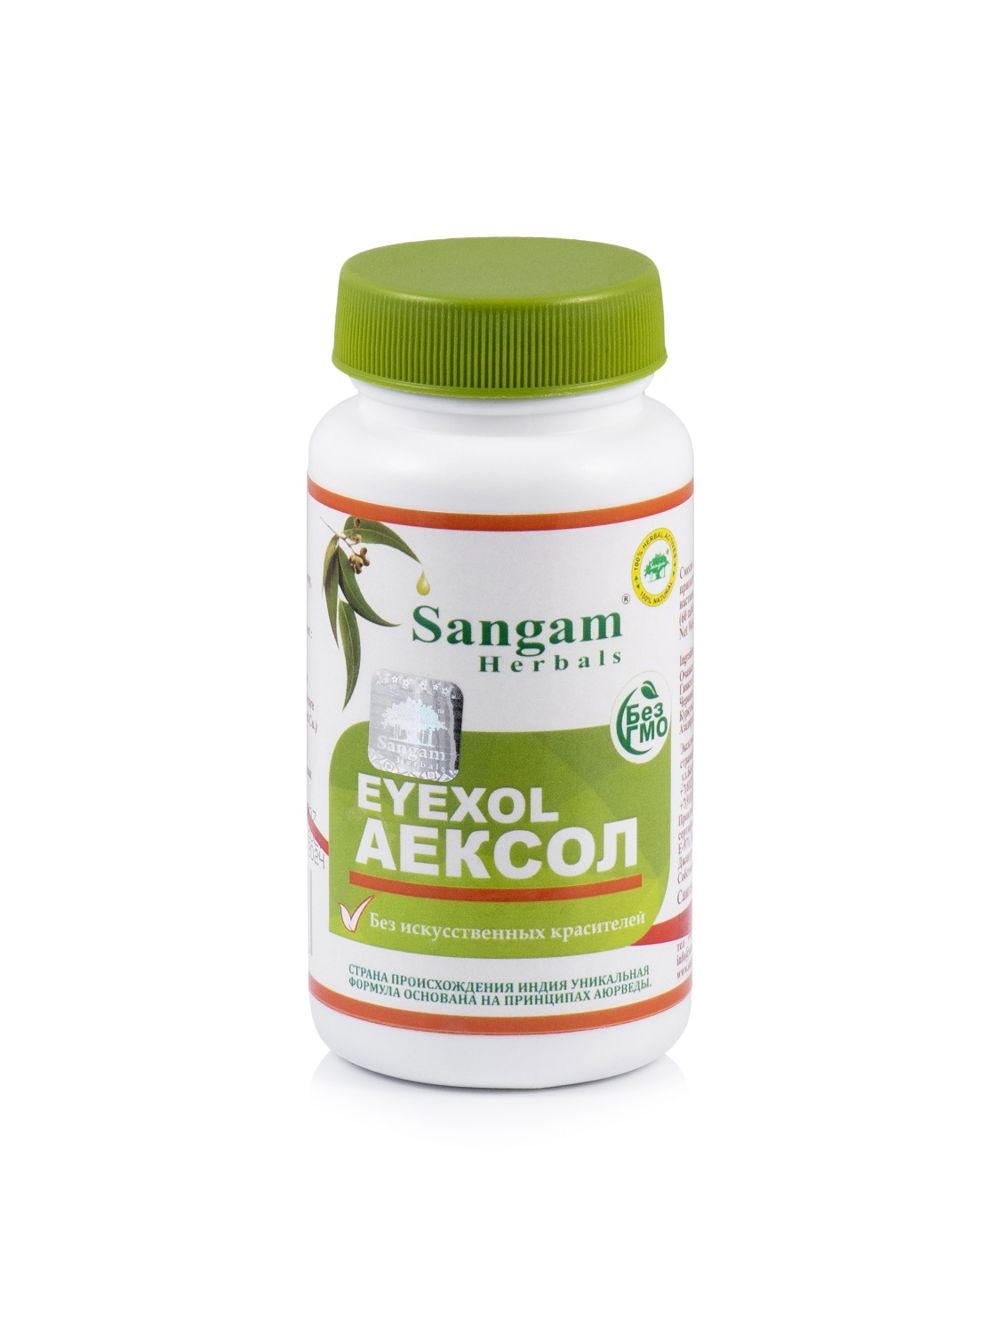 Аексол Sangam Herbals (60 таблеток), 